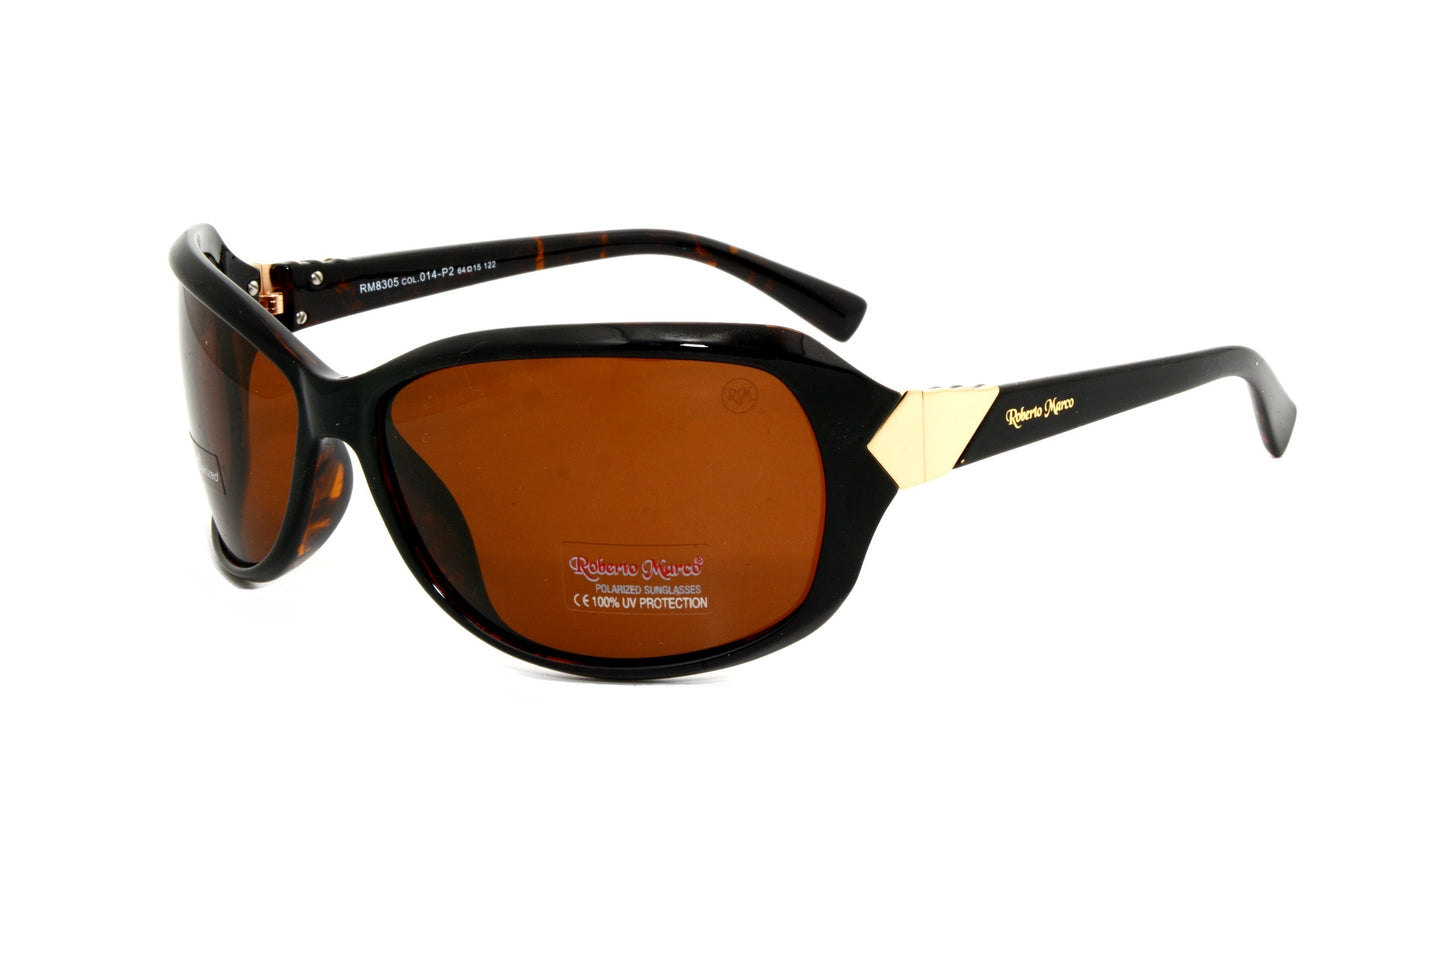 Roberto Marco sunglasses RM8305 014-P2